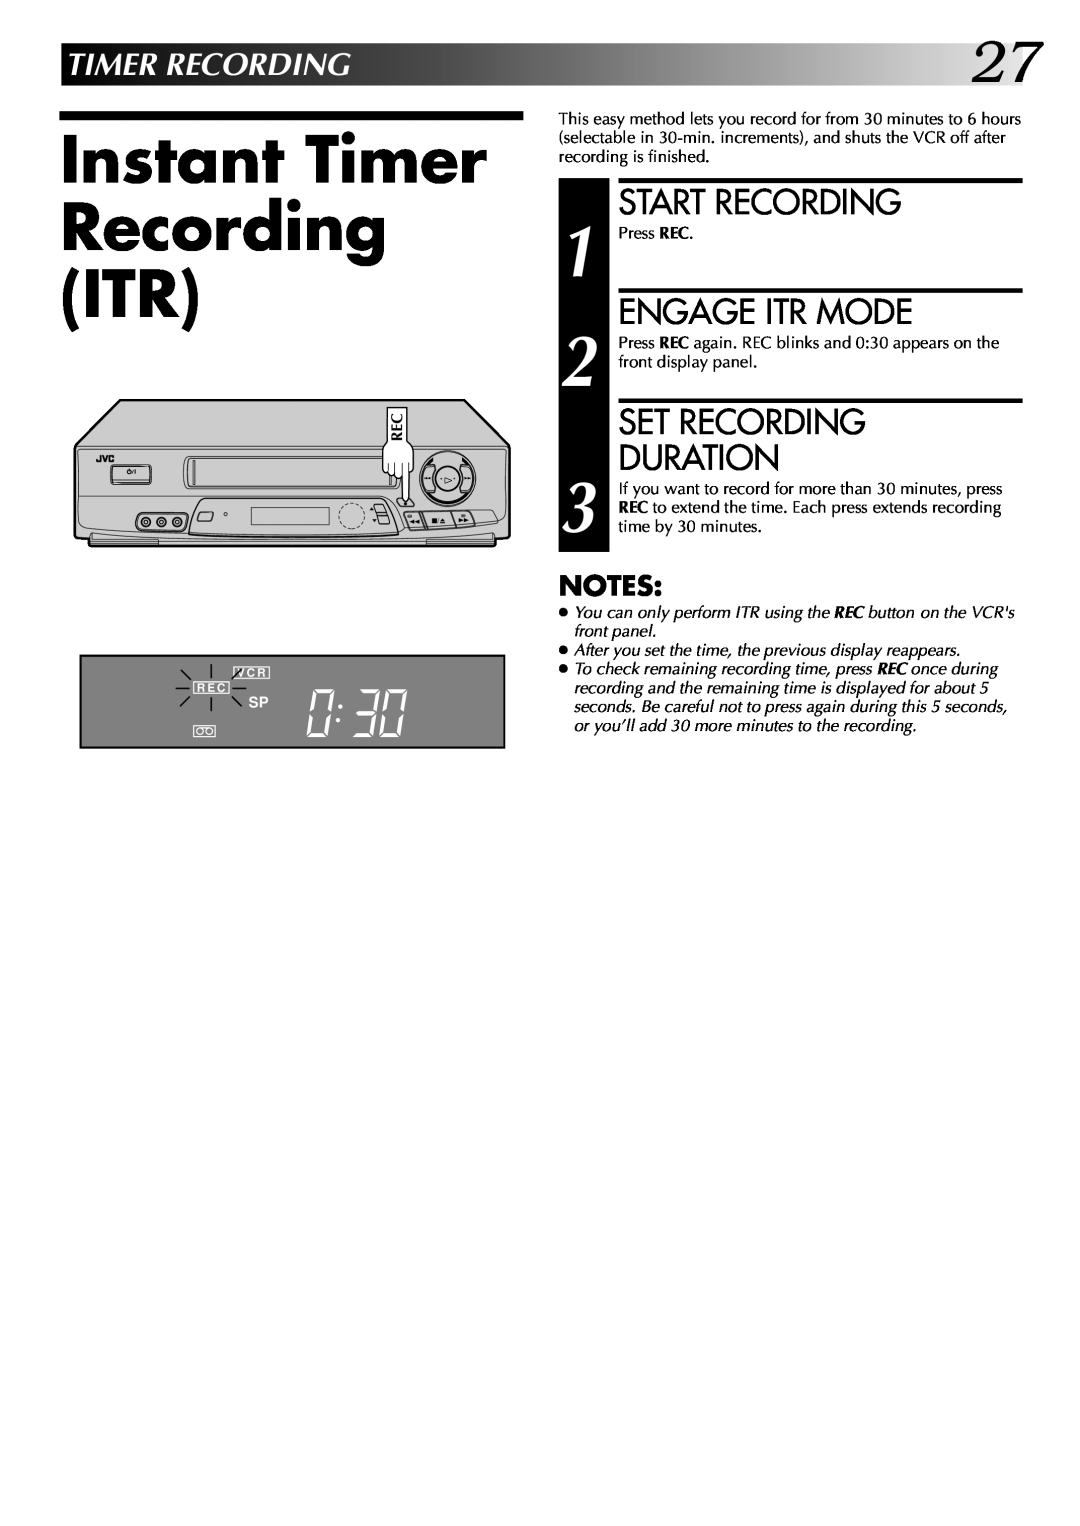 JVC HR-J7004UM manual Instant Timer Recording ITR, Engage Itr Mode, Set Recording Duration, Timerrecording, Start Recording 